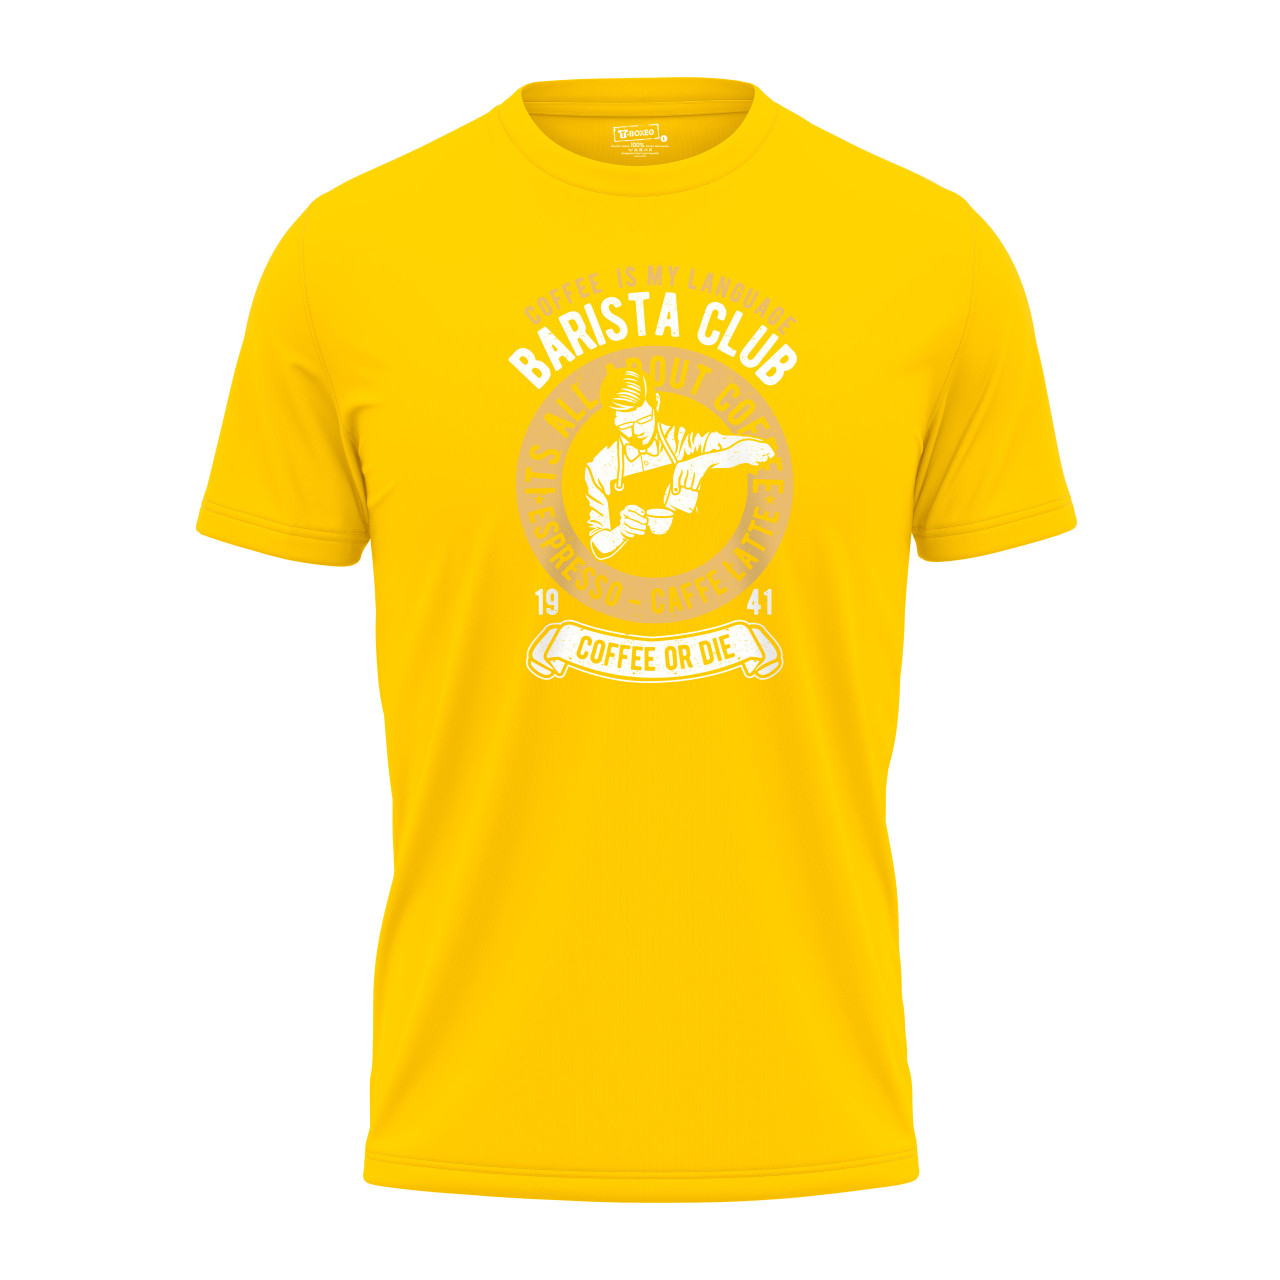 Pánské tričko s potiskem “Barista Club”